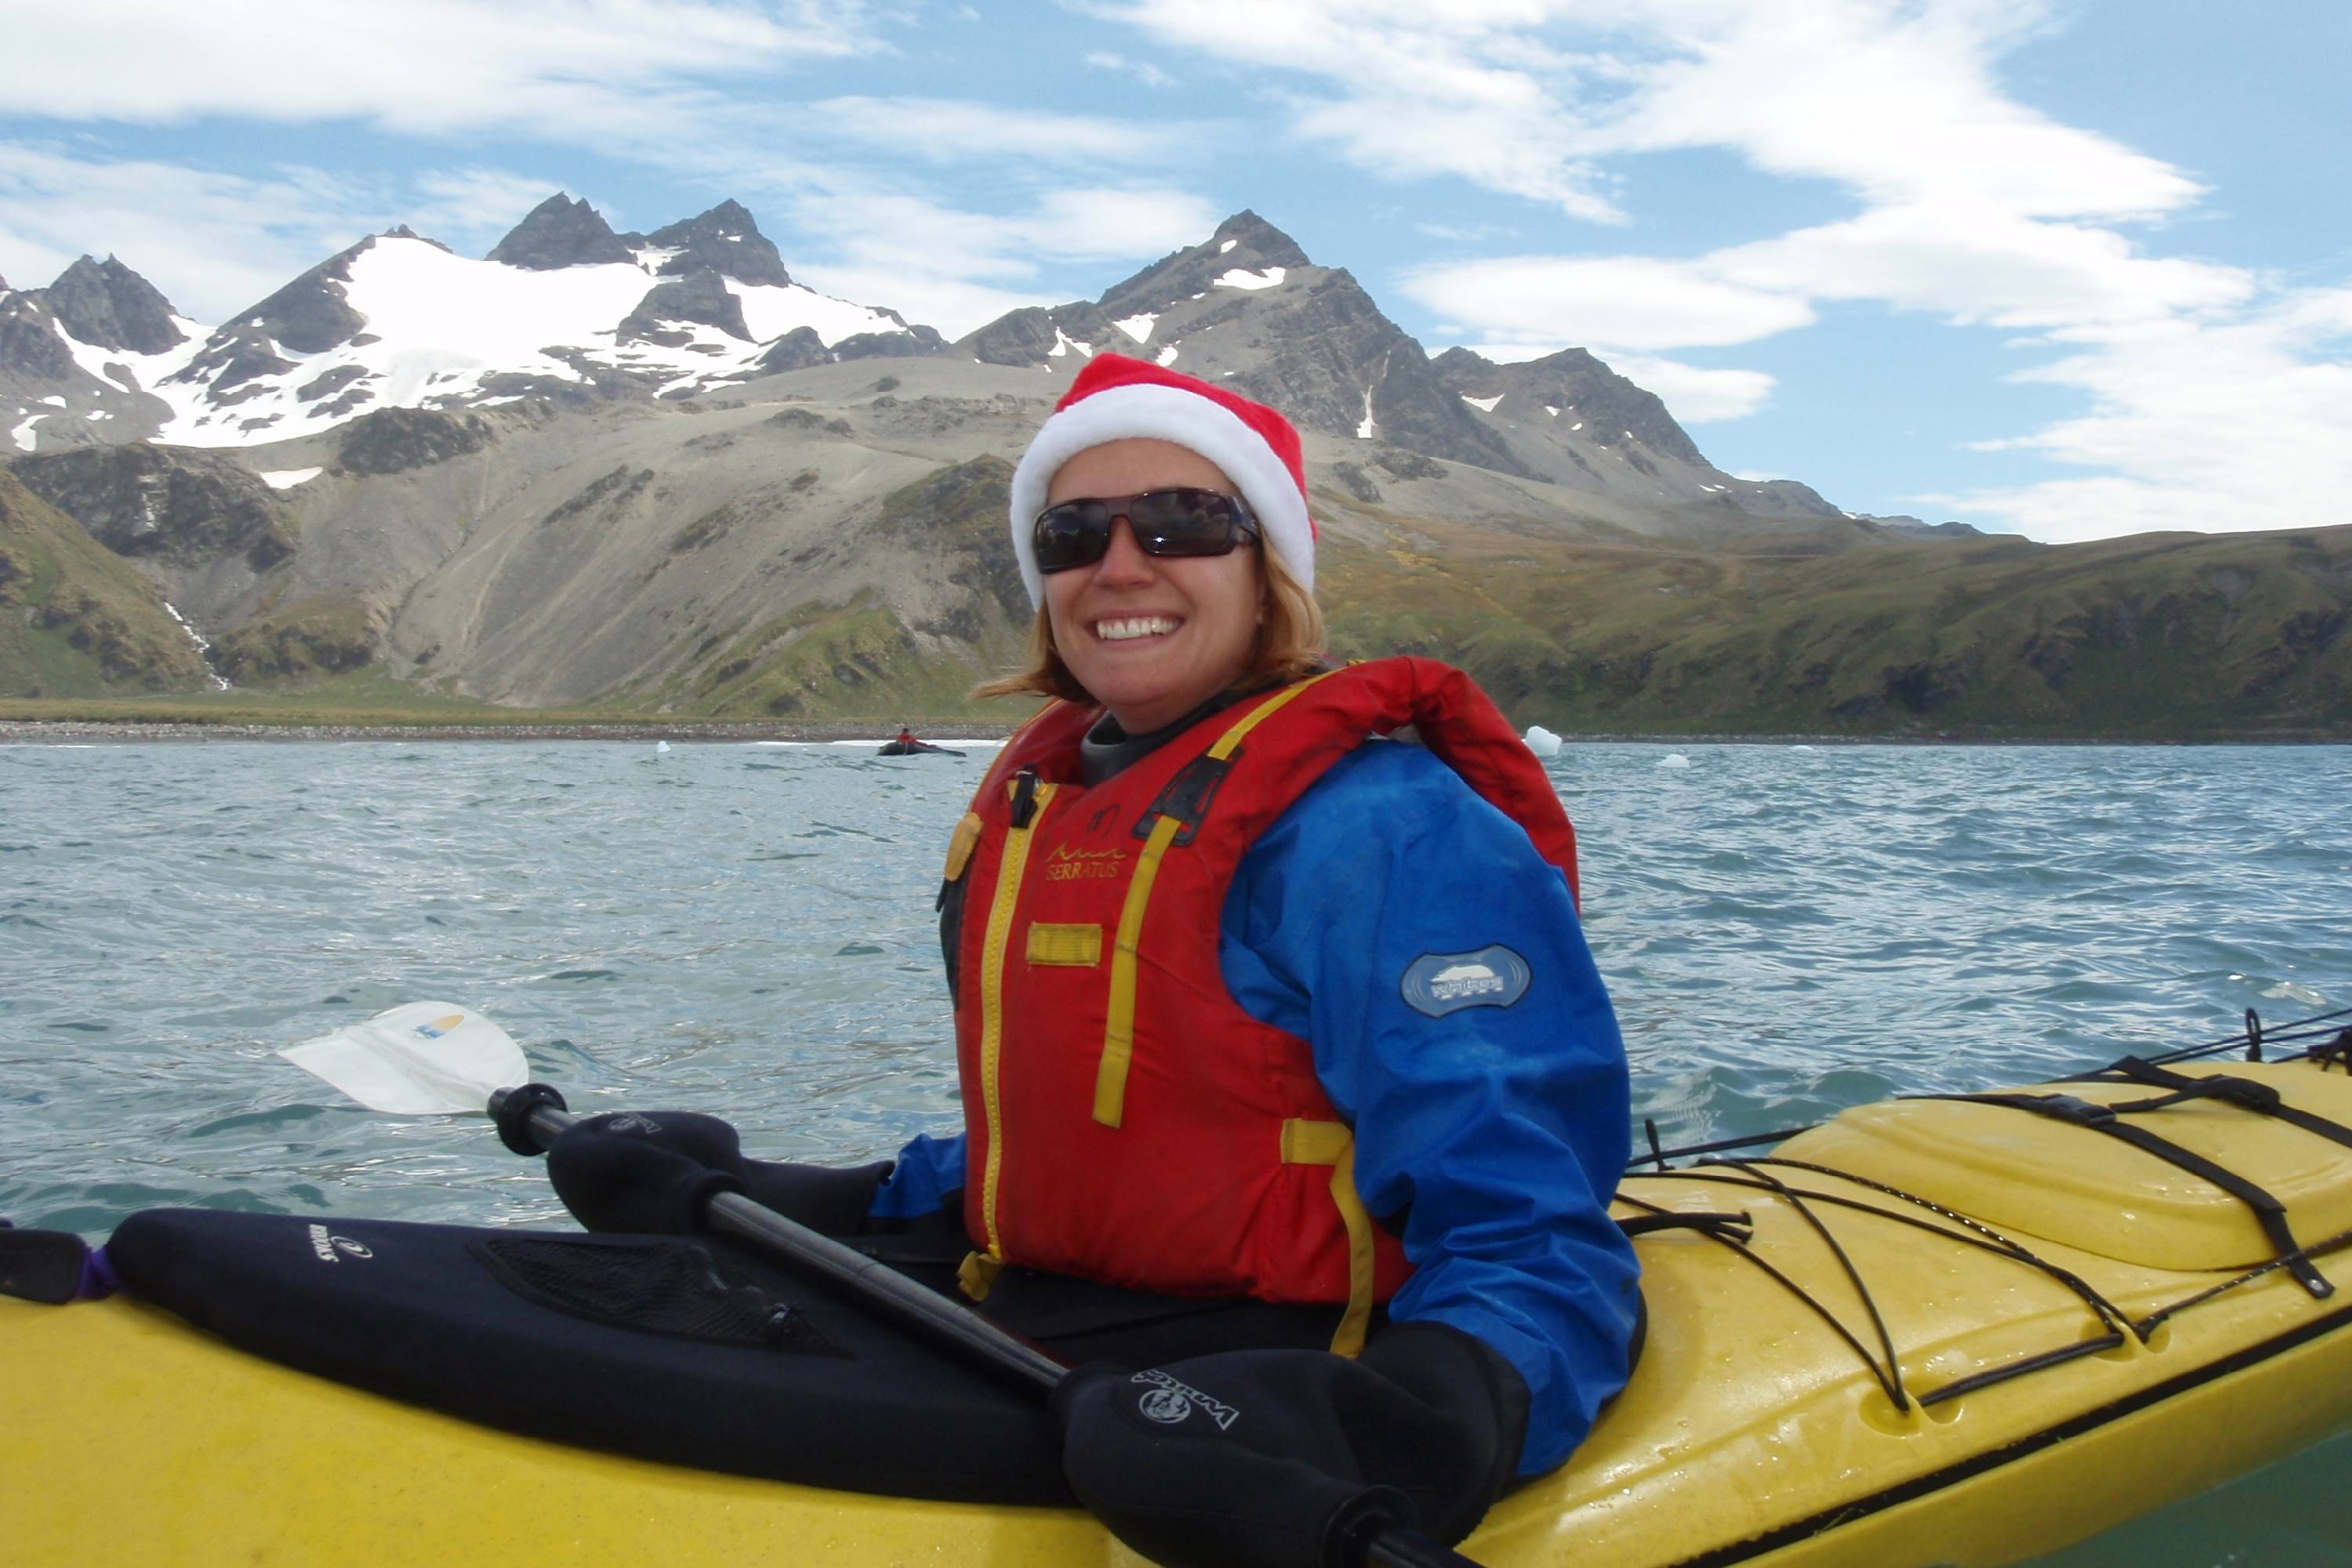 Heading out for an Antarctic Christmas kayak trip! 